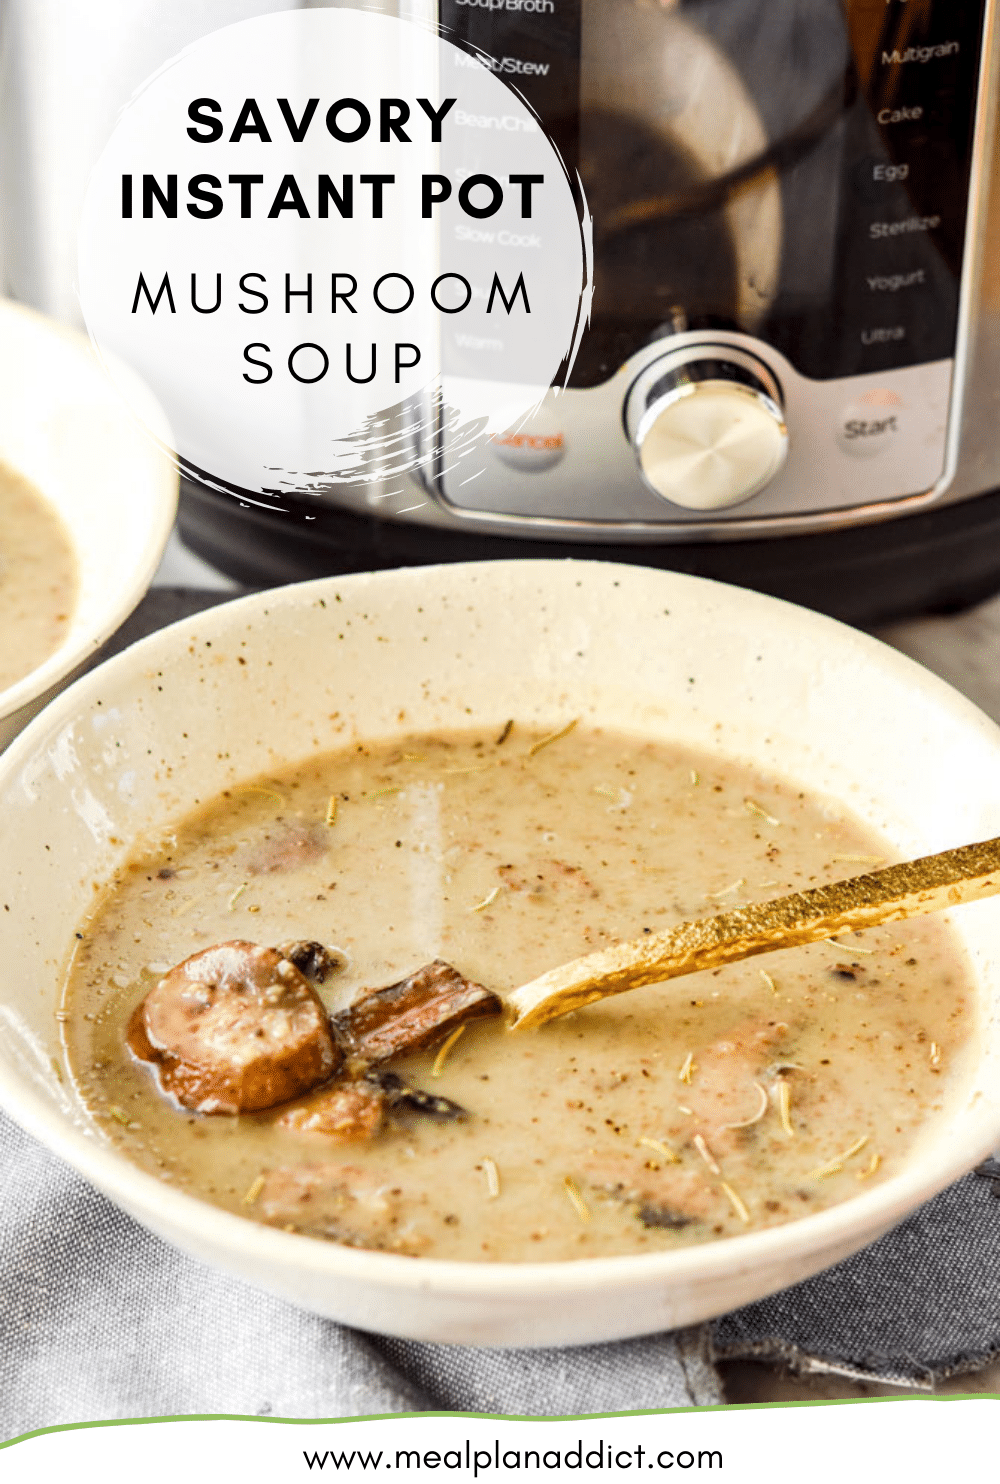 Savory Instant Pot Mushroom Soup